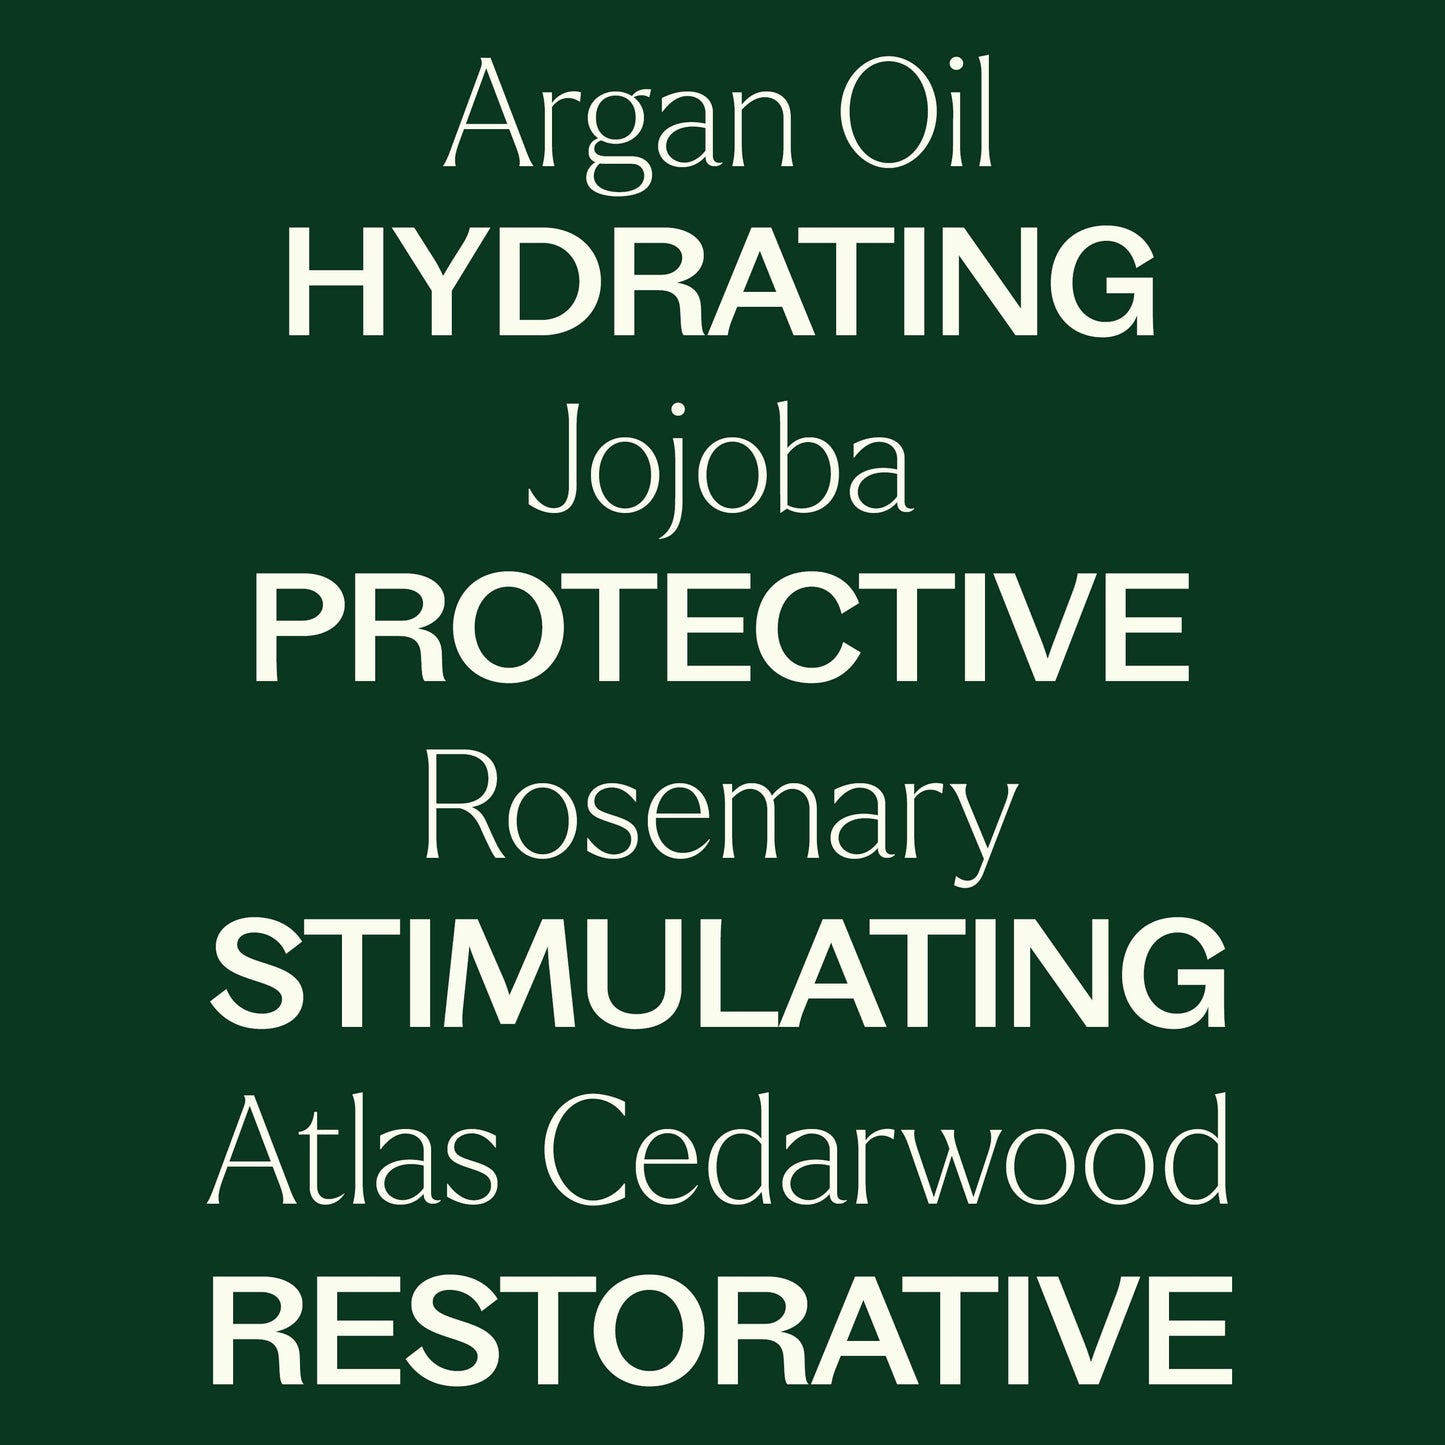 Hair Therapy Strengthen & Grow Hair Serum is hydrating, protective, stimulating, restorative. Has argan oil, jojoba, rosemary, atlas cedarwood.